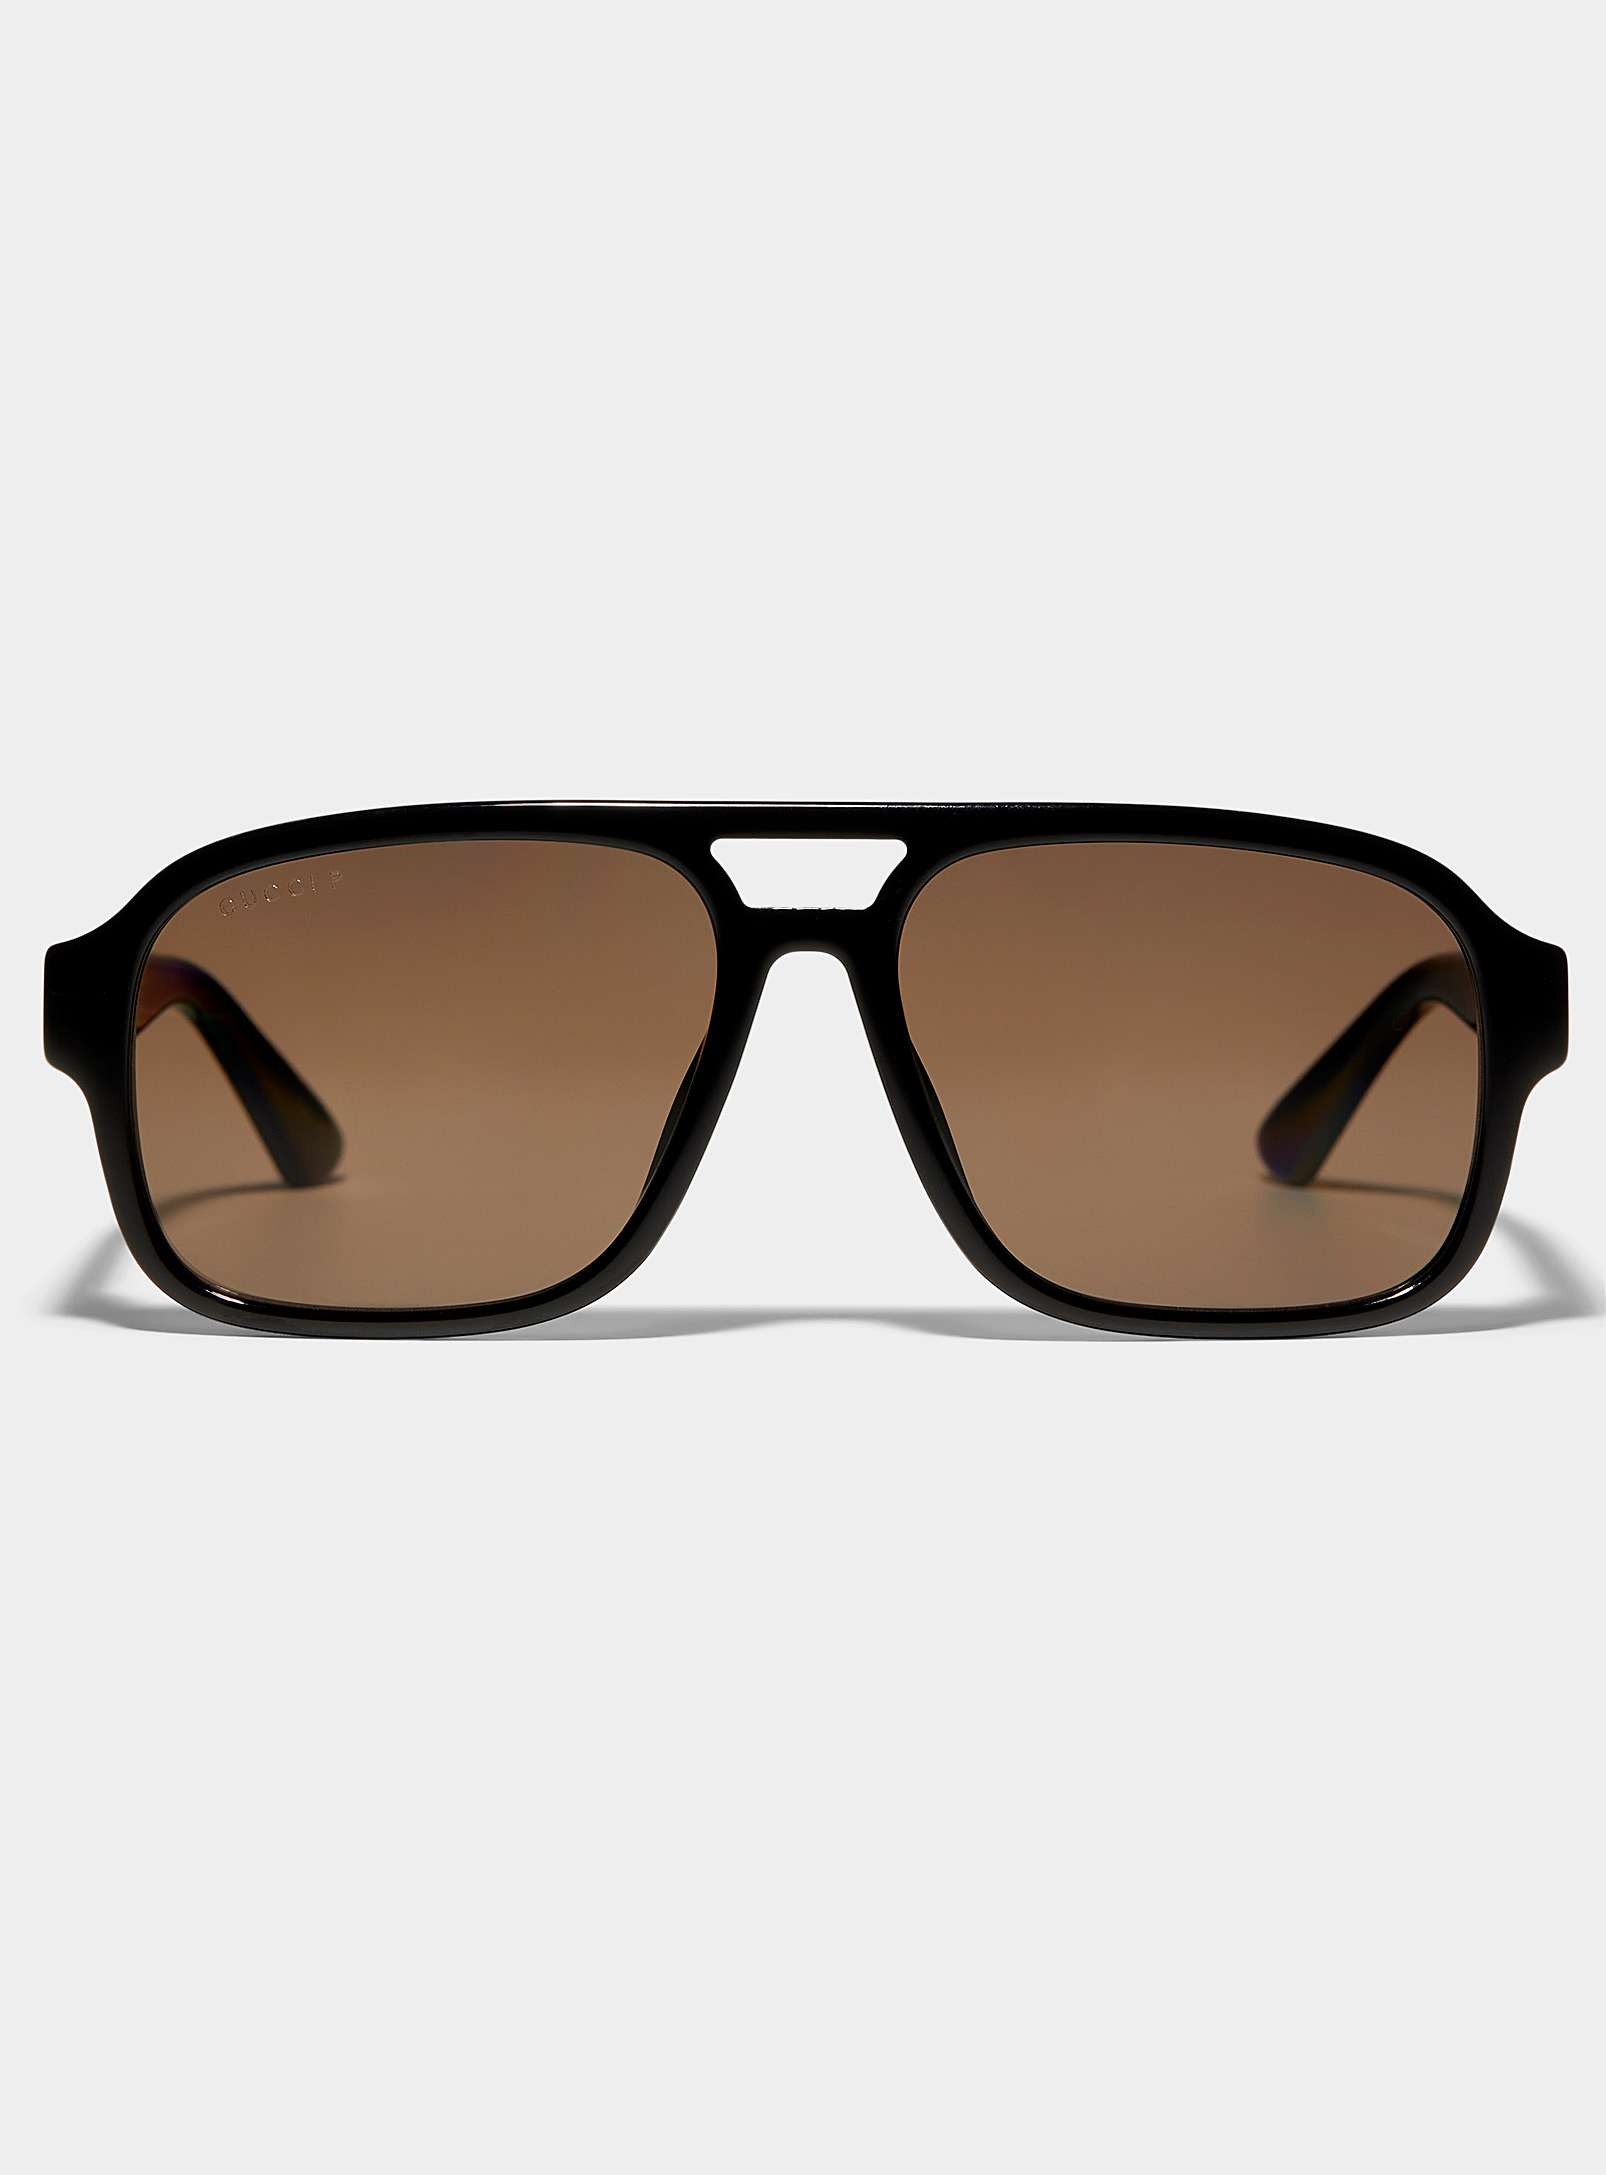 Gucci - Men's Metallic gold geometric aviator sunglasses | Square One